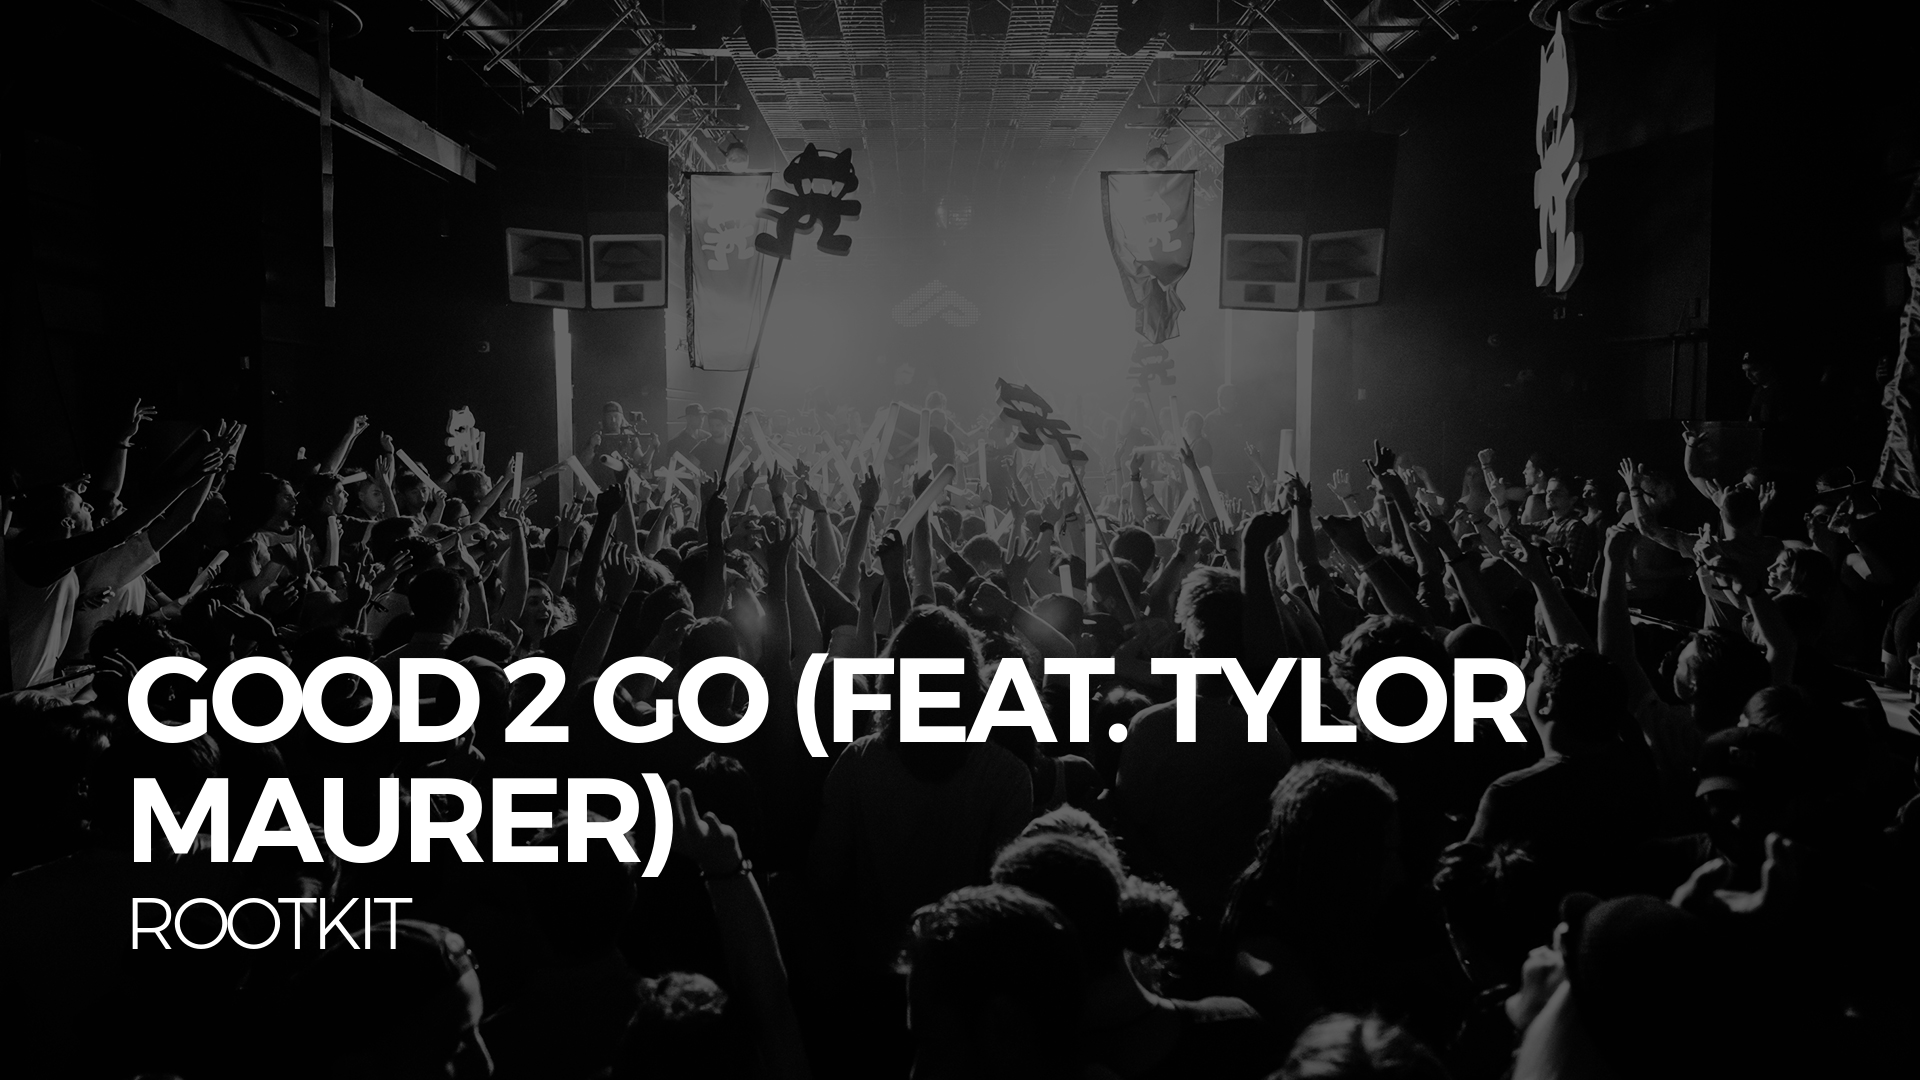 Rootkit - Good 2 Go (feat. Tylor Maurer) [Monstercat Release]